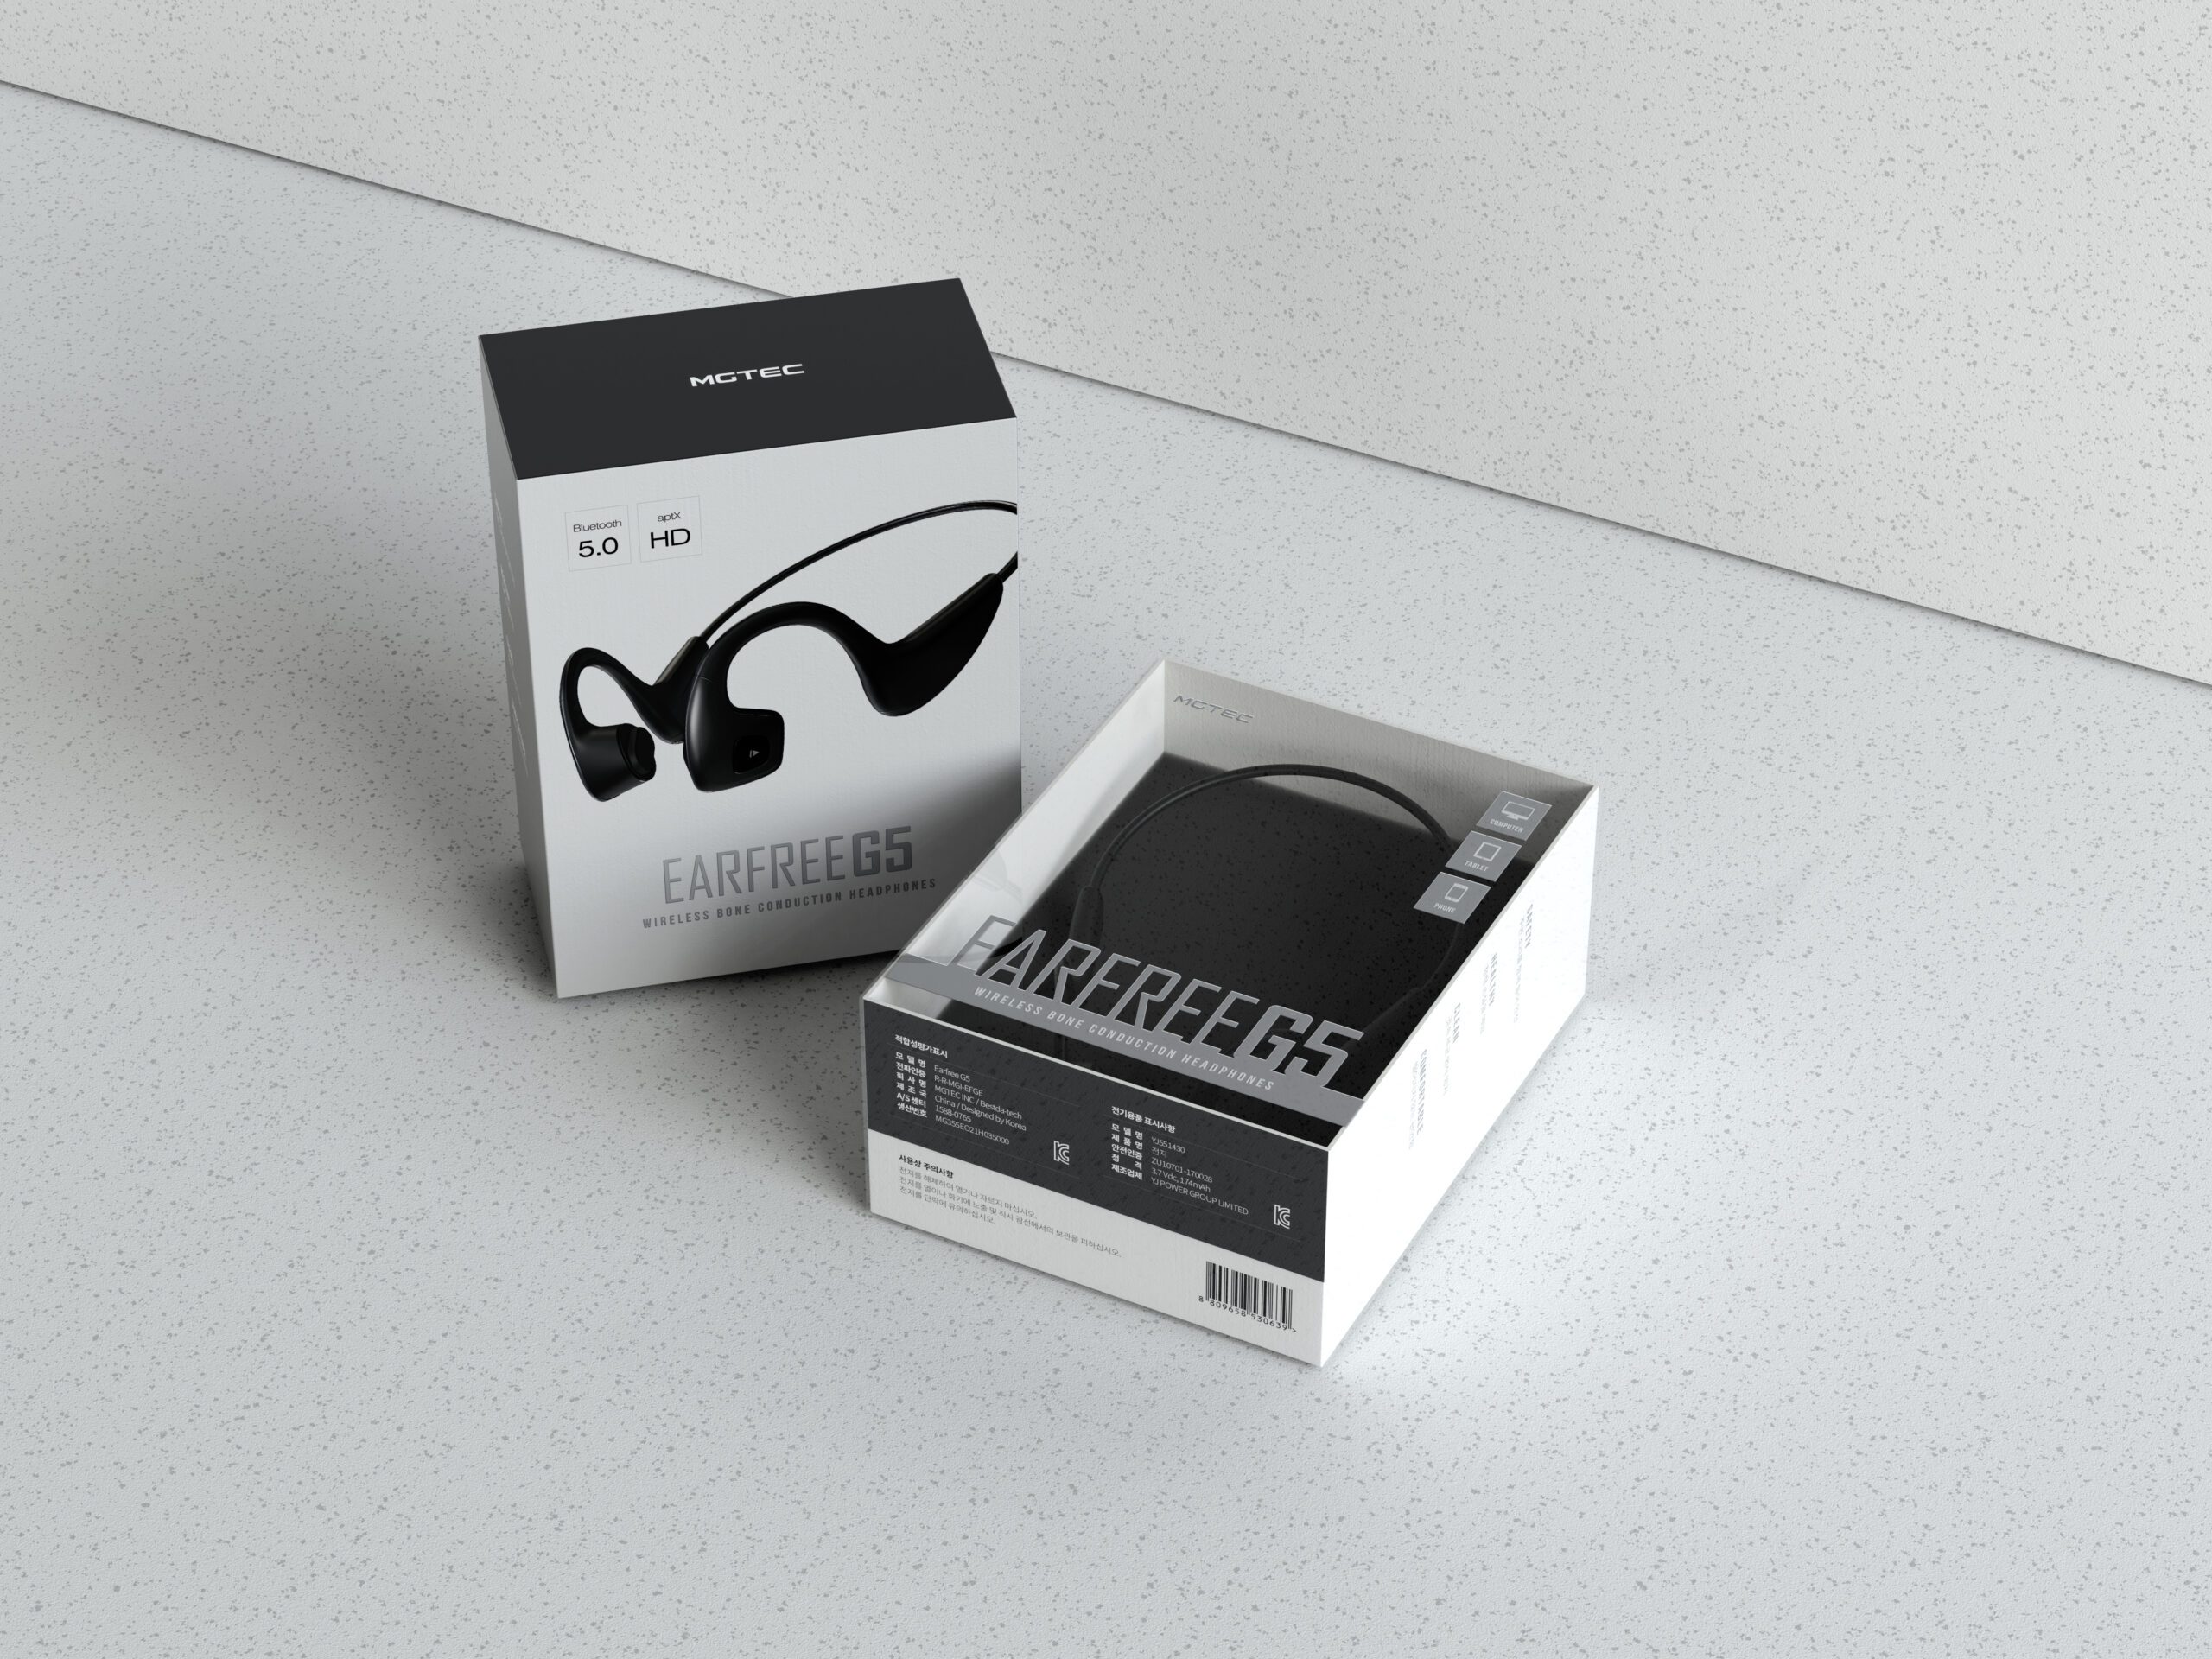 Earfree G5 Earphone 패키지, 3D 목업